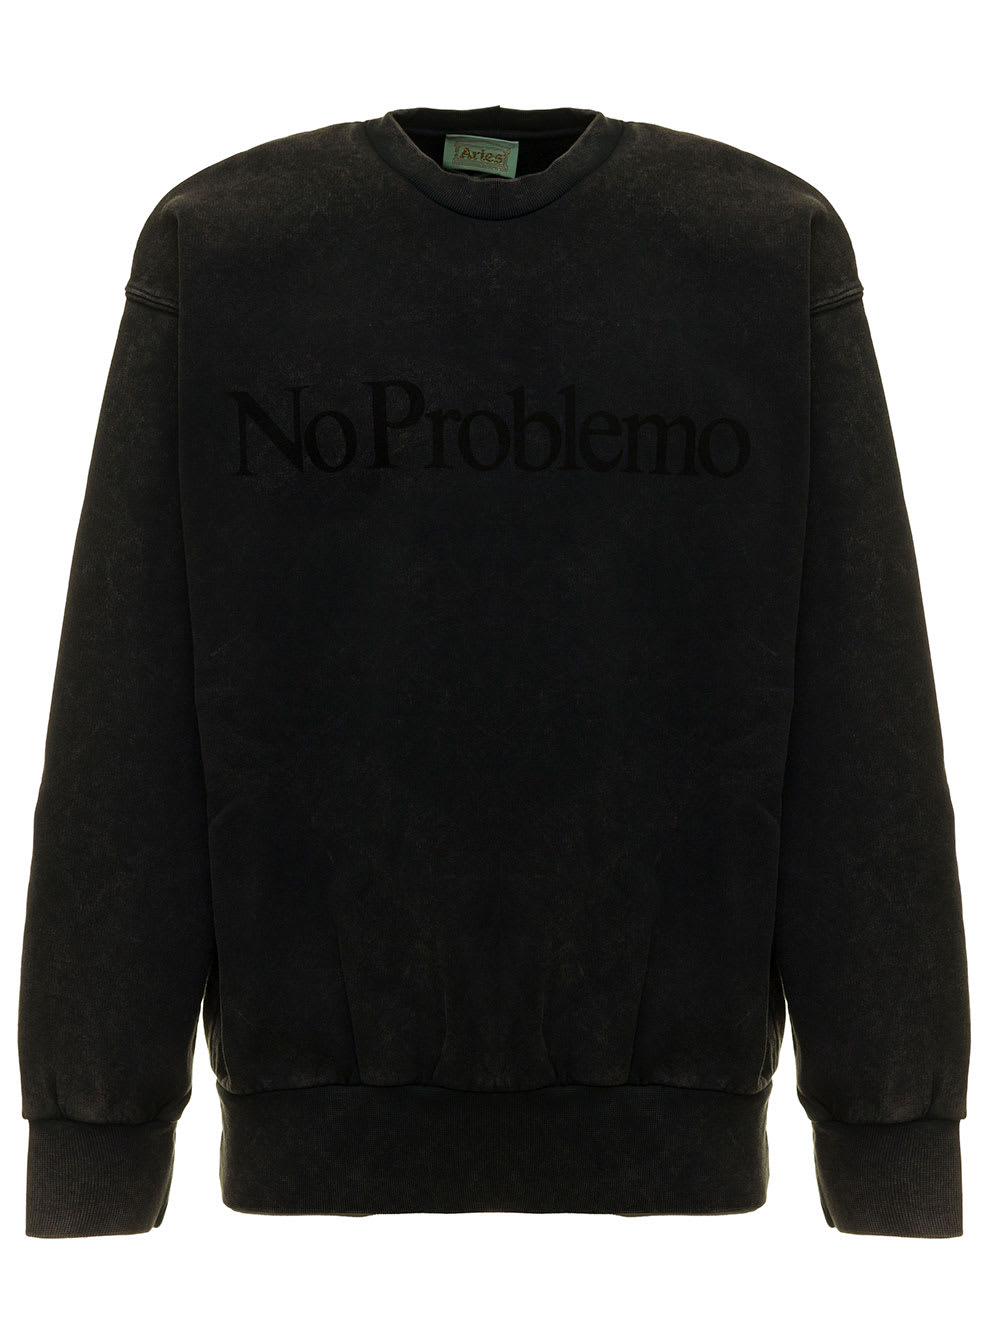 Aries Mans No Problemo Black Jersey Sweatshirt